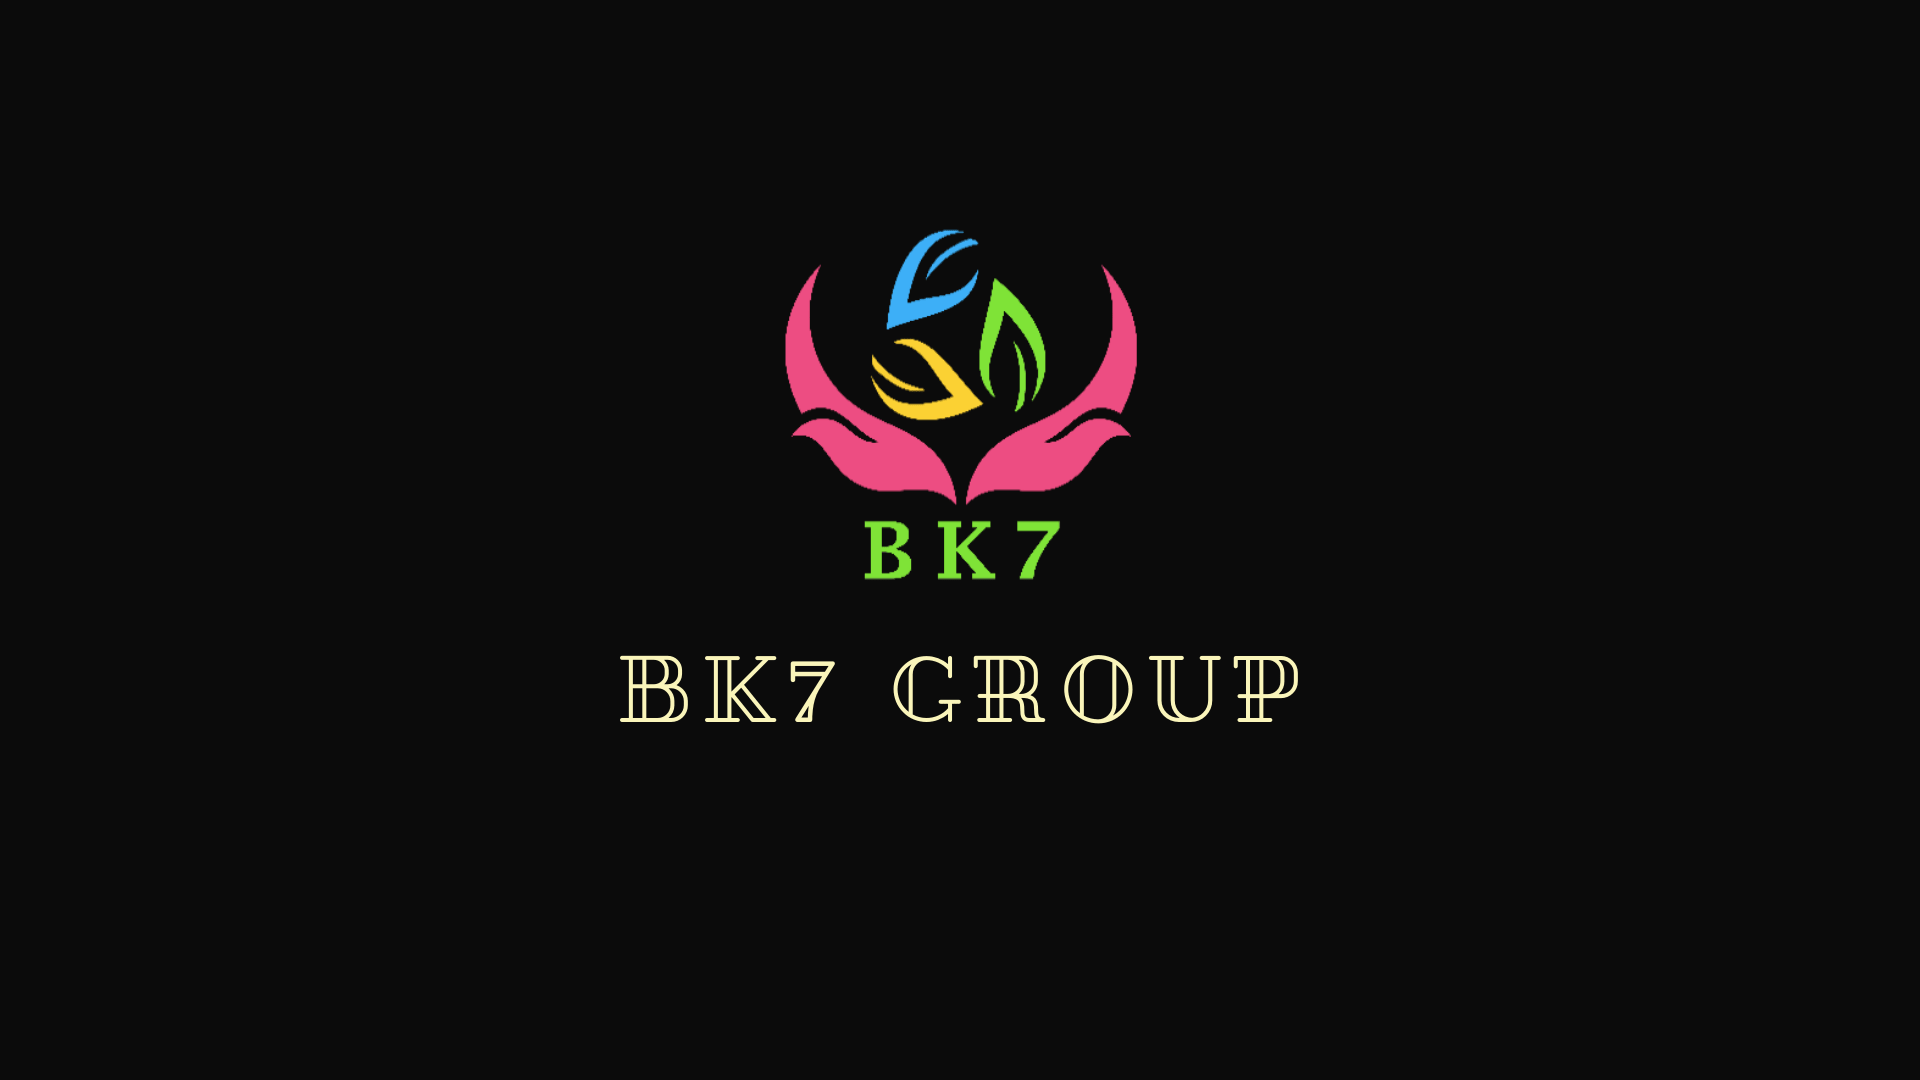 Bk7 group logo